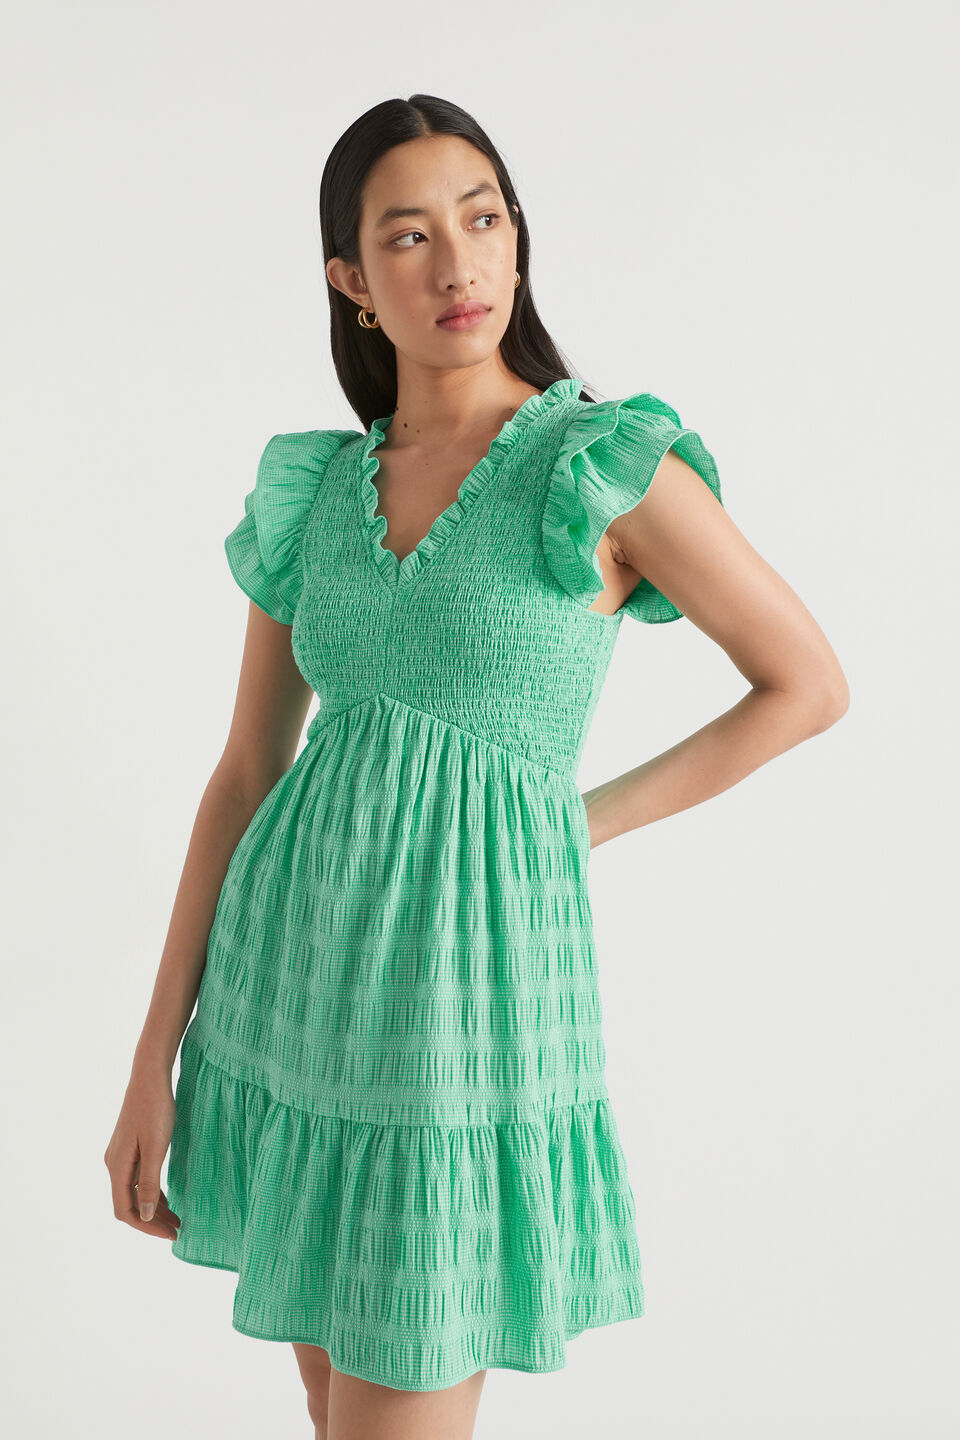 Textured Gingham Mini Dress  Jade Green Gingham